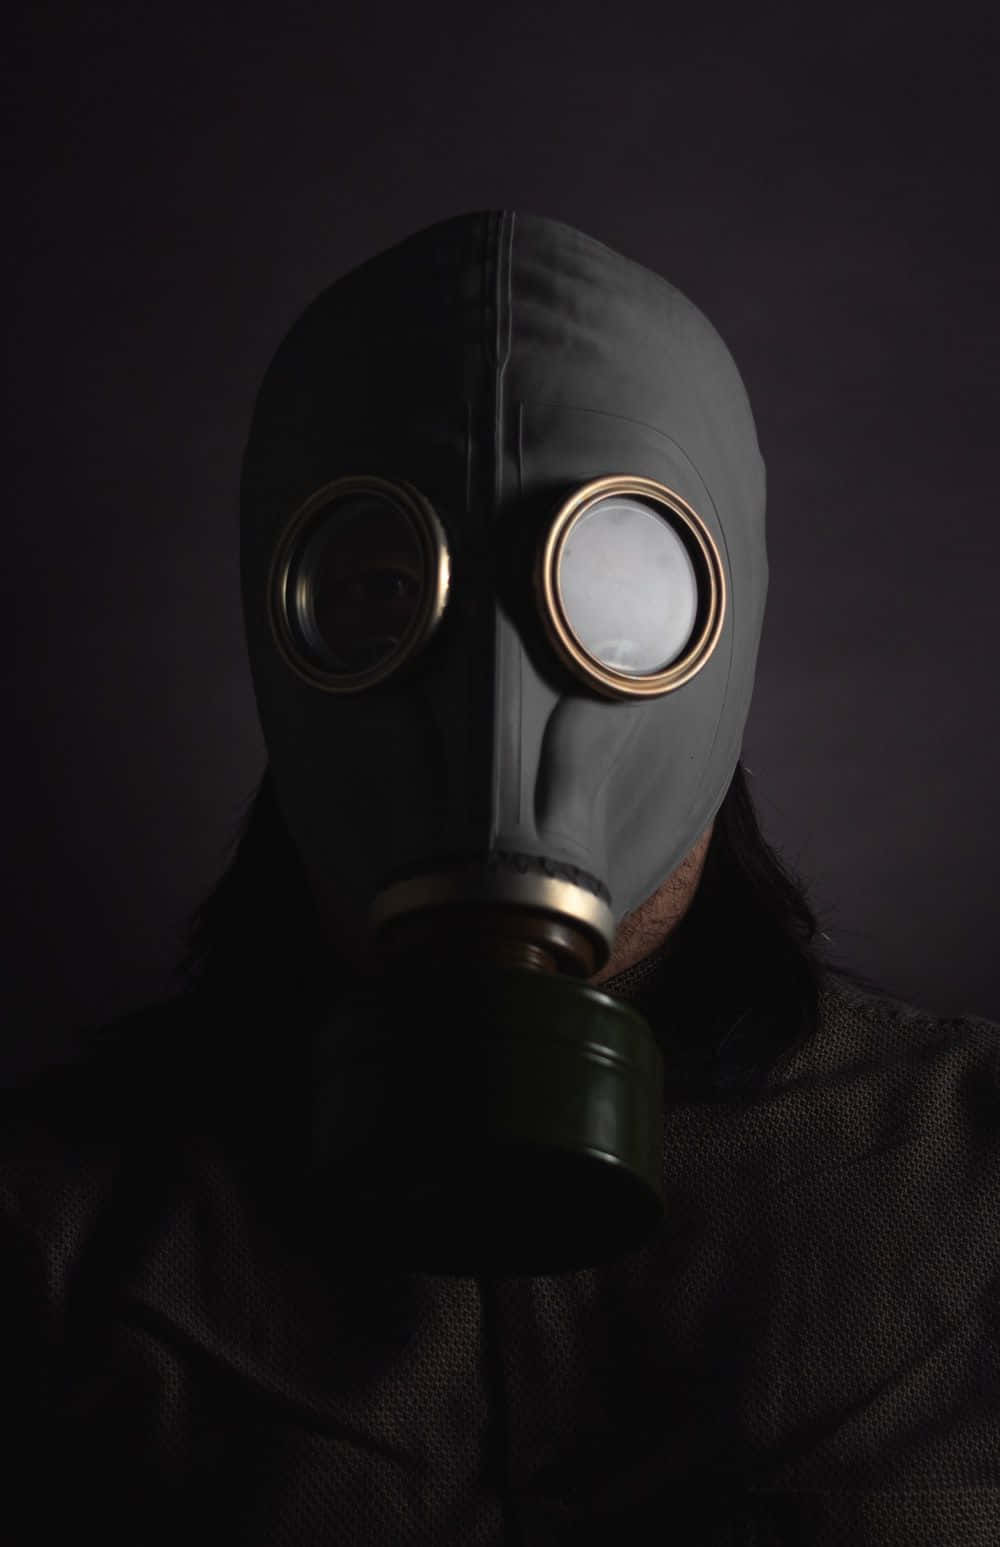 A Man In A Gas Mask On A Dark Background